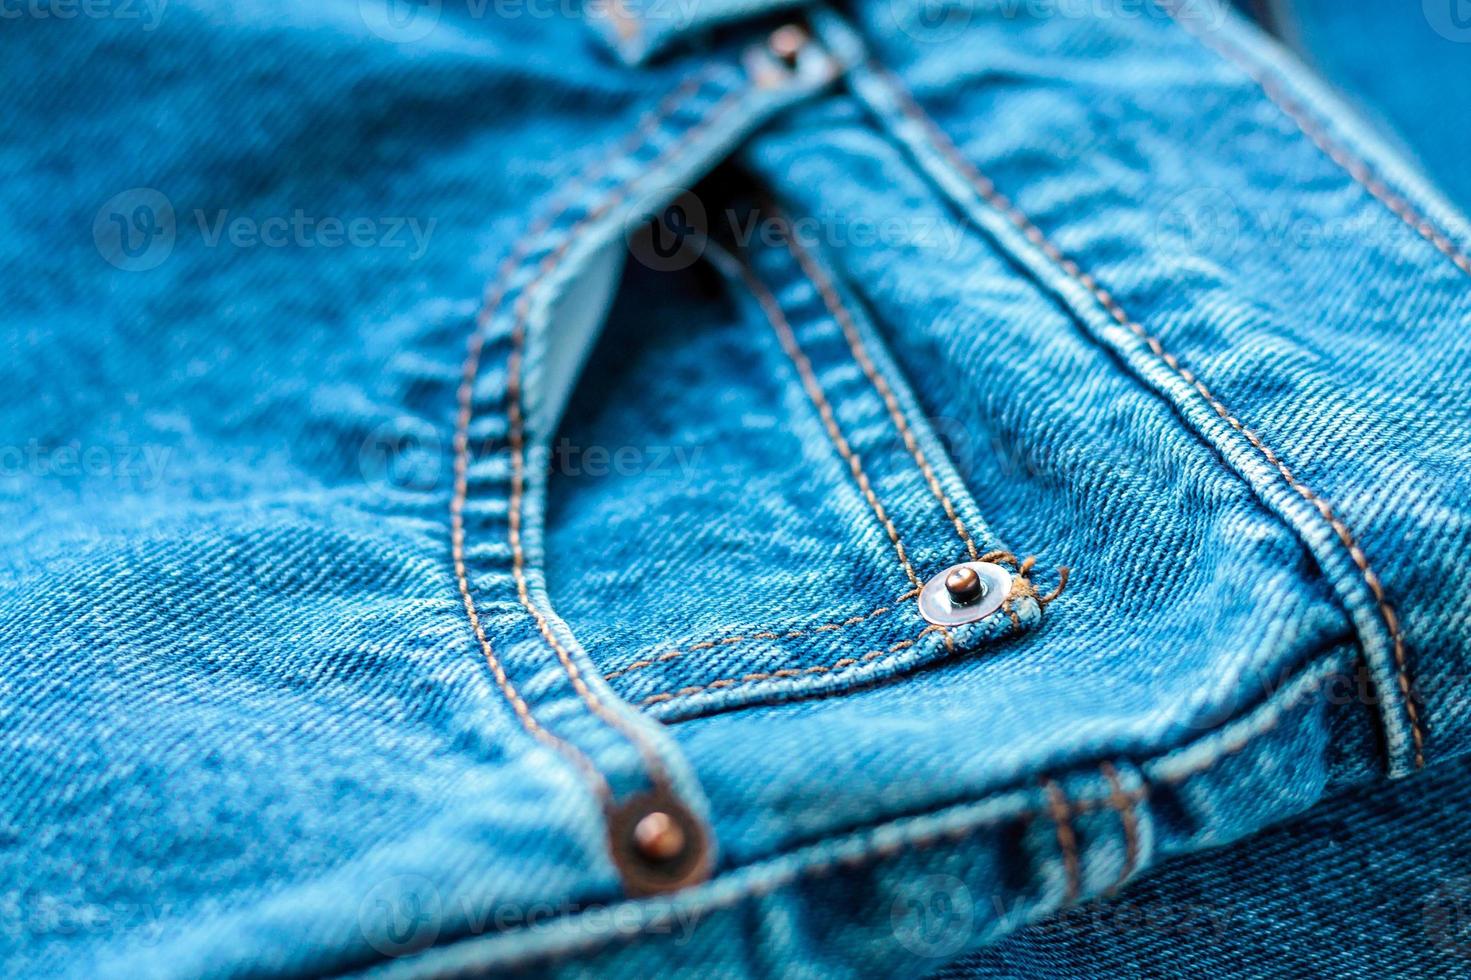 blue jeans pocket photo